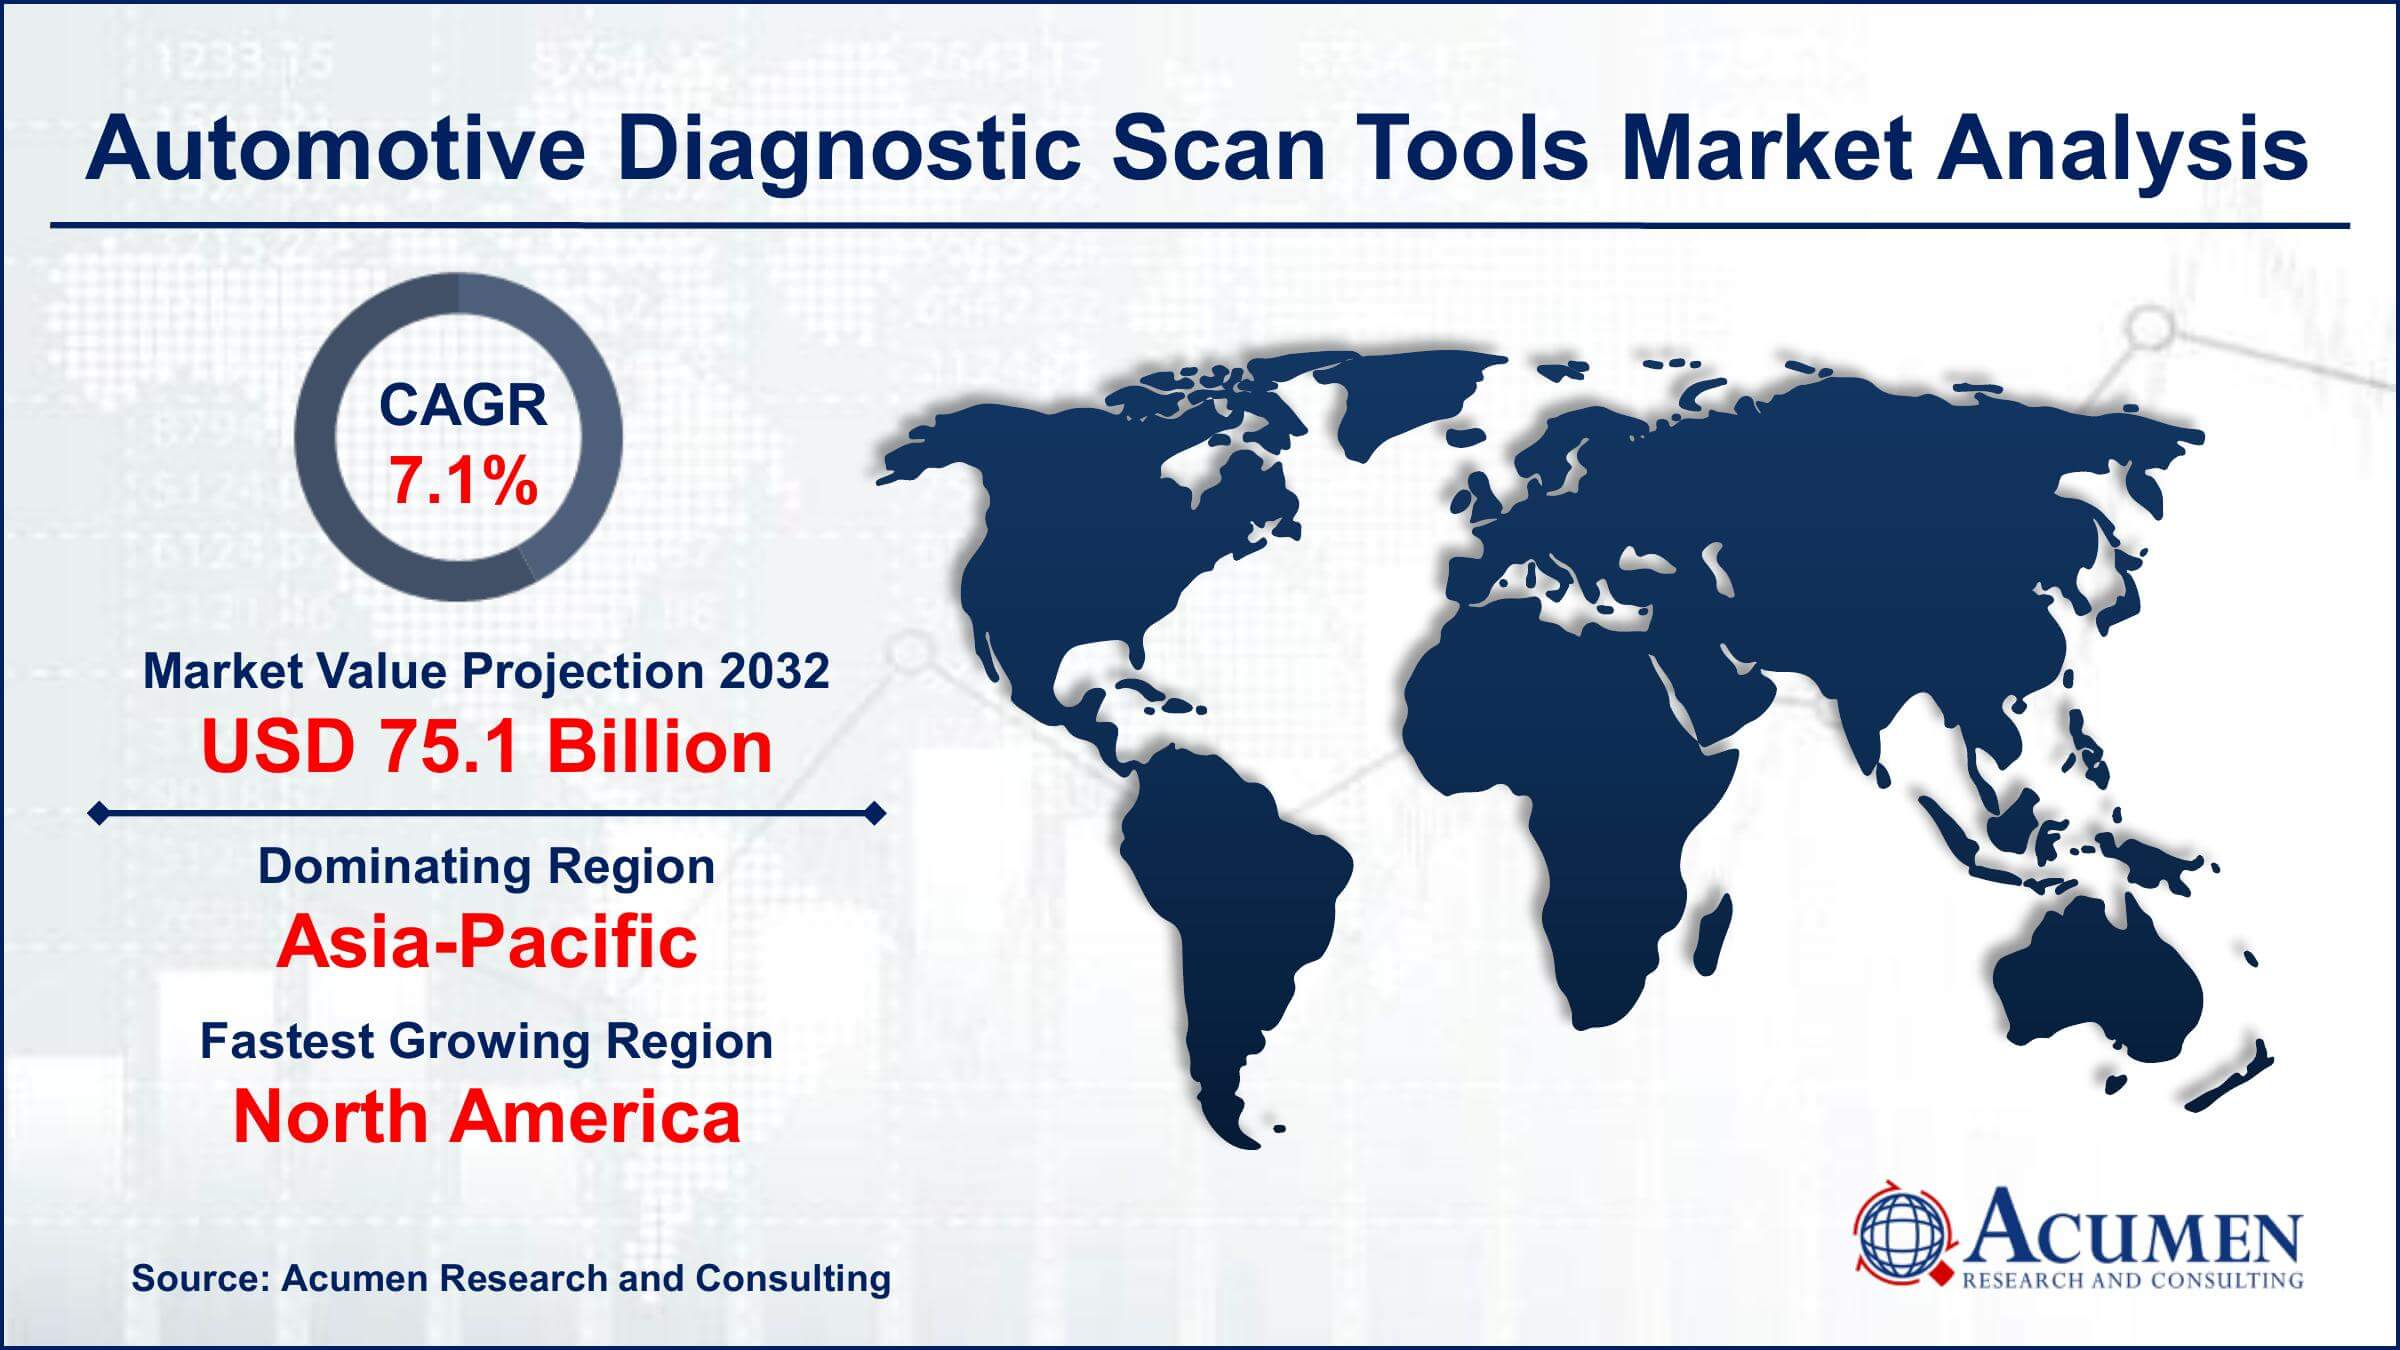 Global Automotive Diagnostic Scan Tools Market Trends